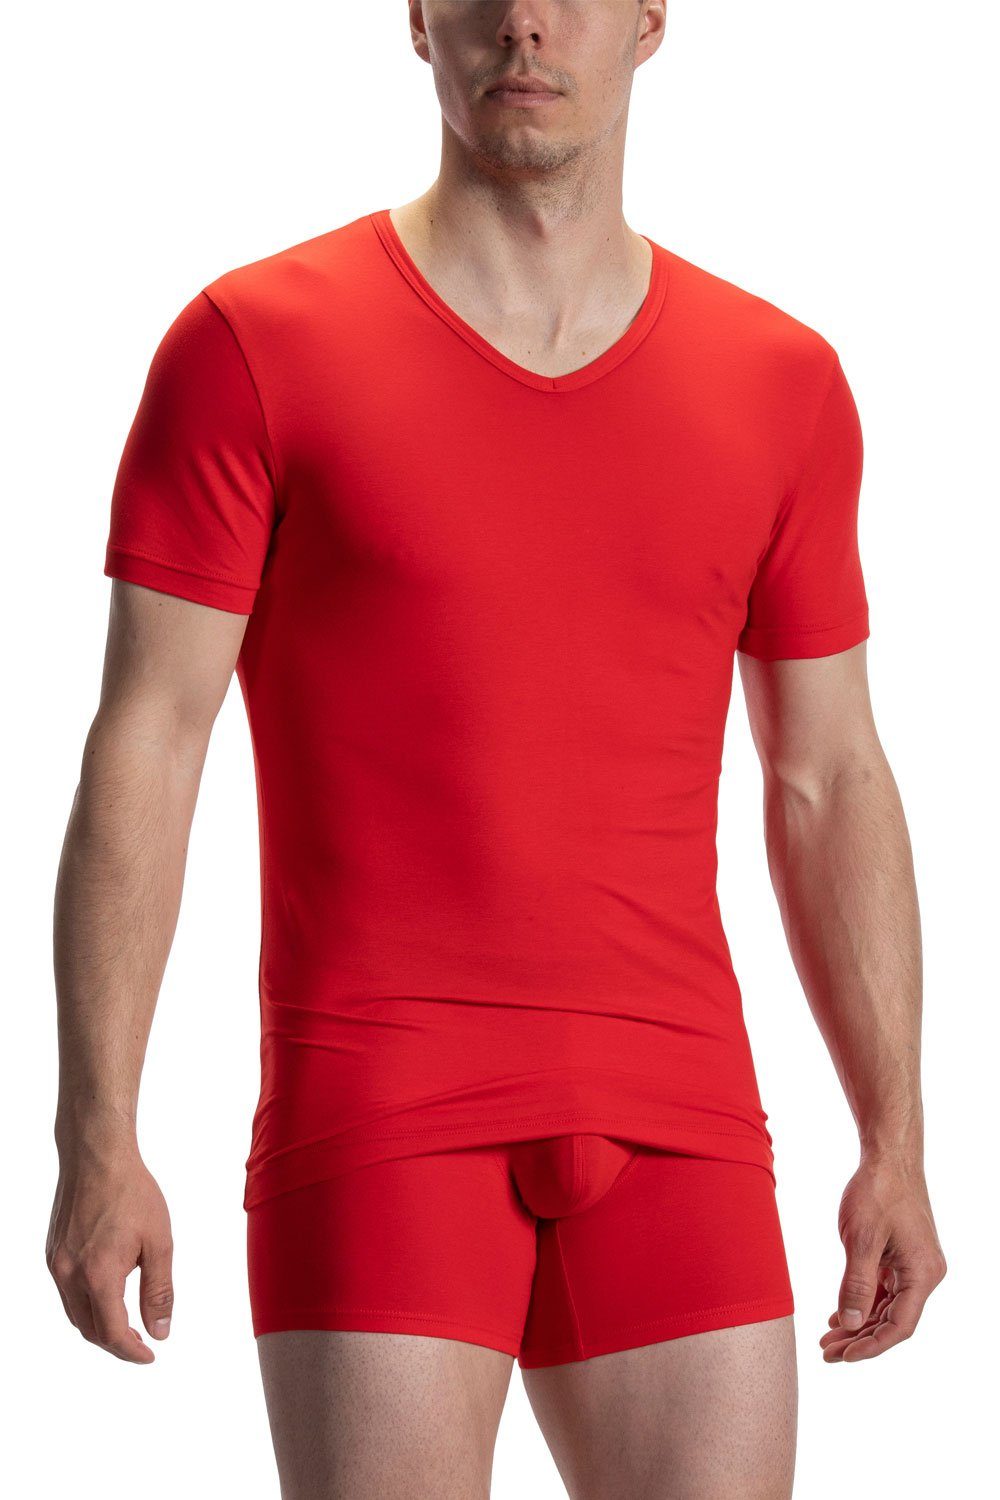 Olaf Benz 107418 (Reg) V-Neck red Shirt T-Shirt